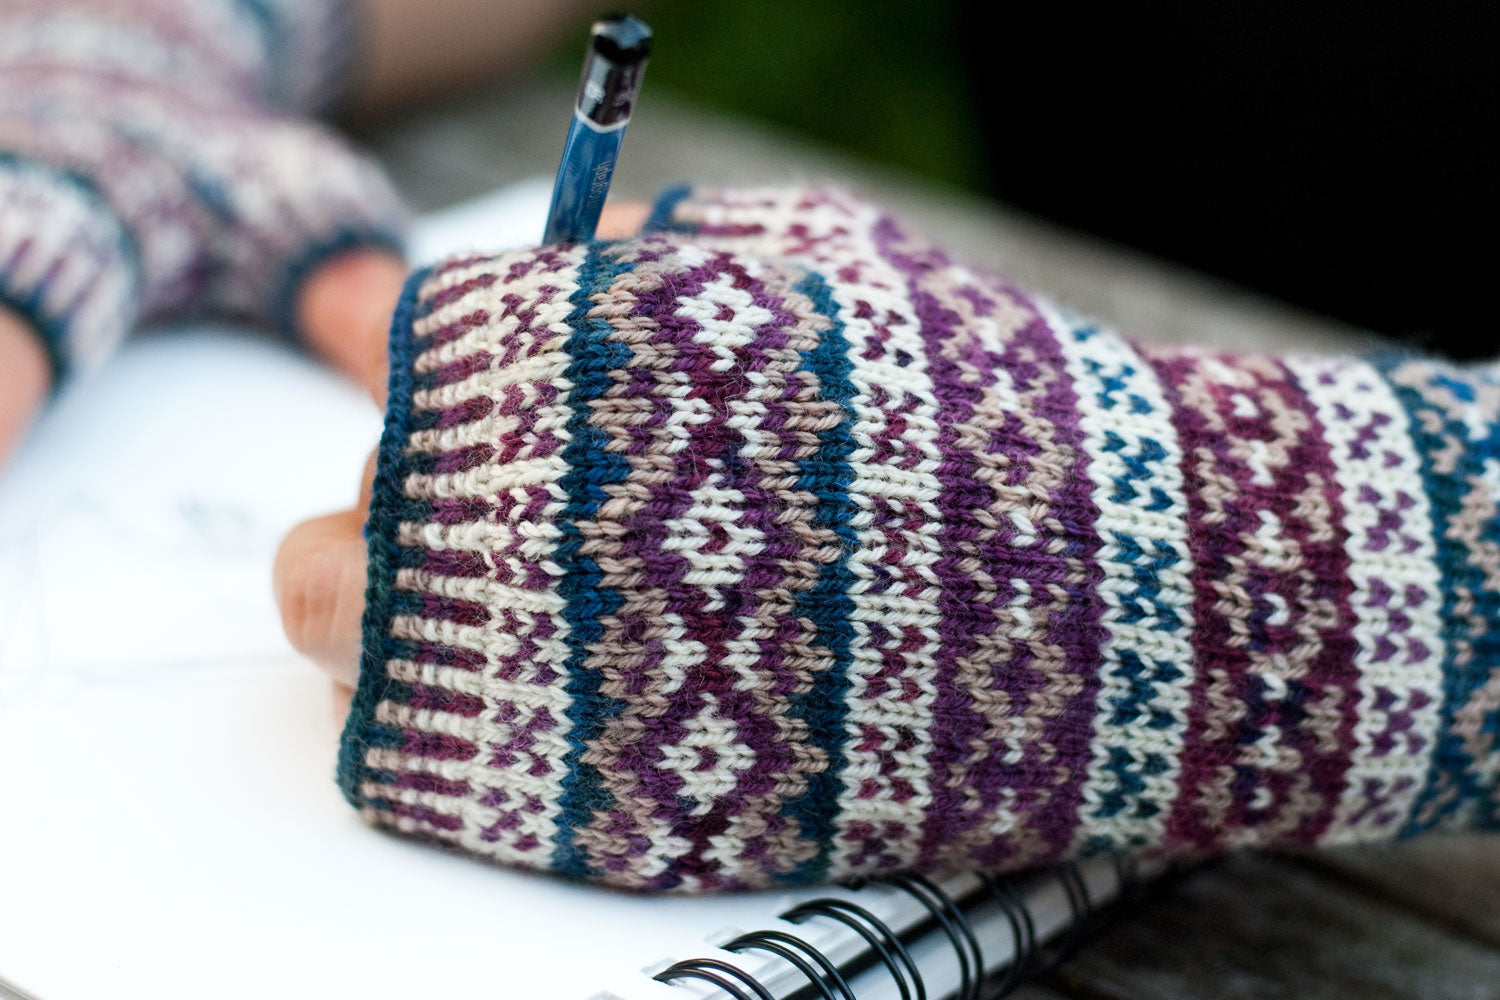 Knitting & Crochet Patterns